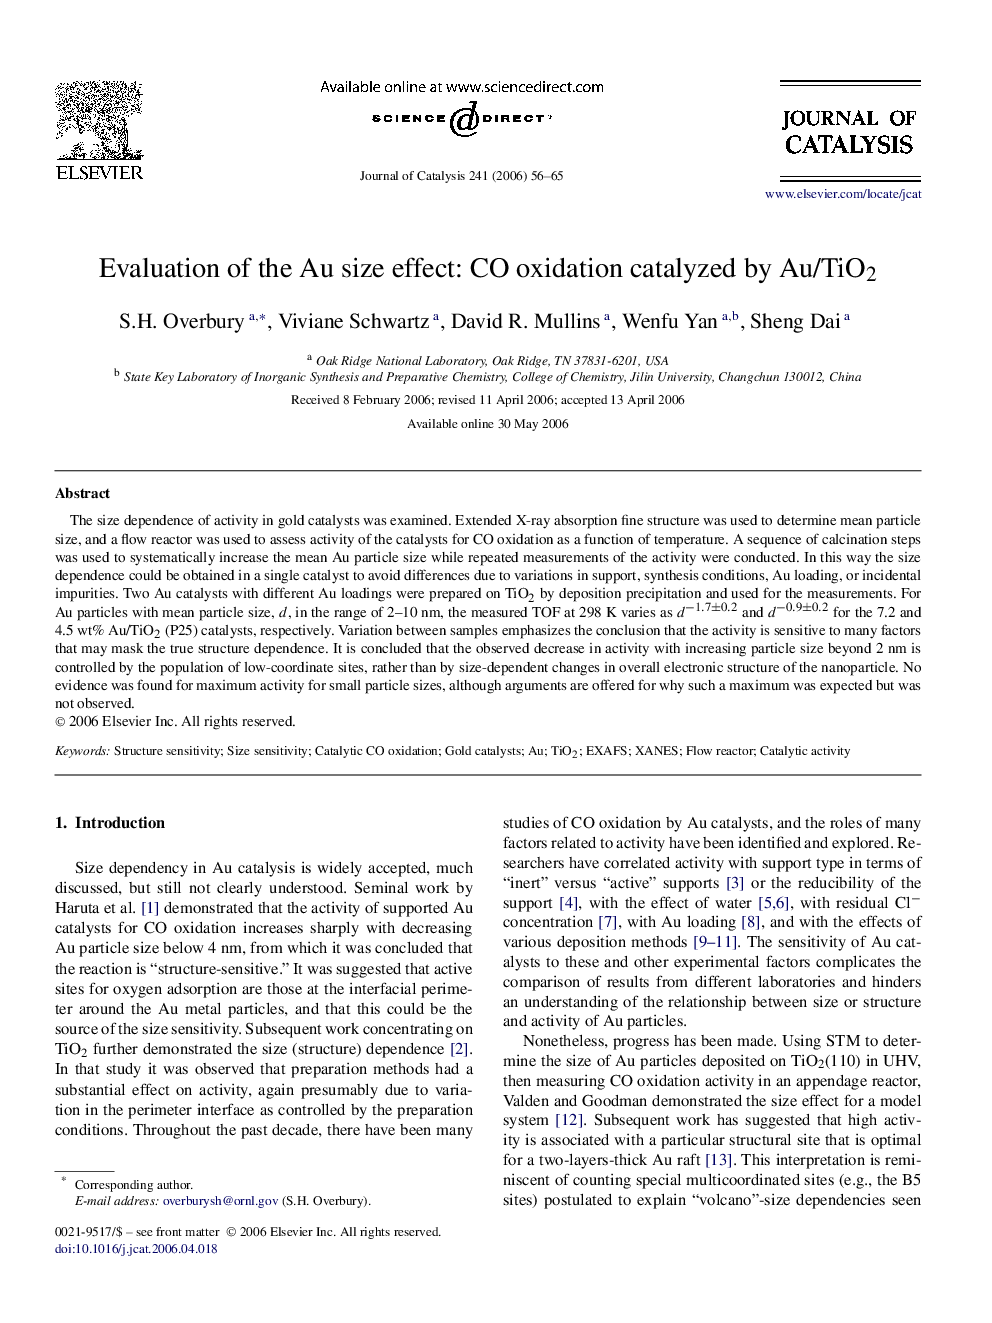 Evaluation of the Au size effect: CO oxidation catalyzed by Au/TiO2